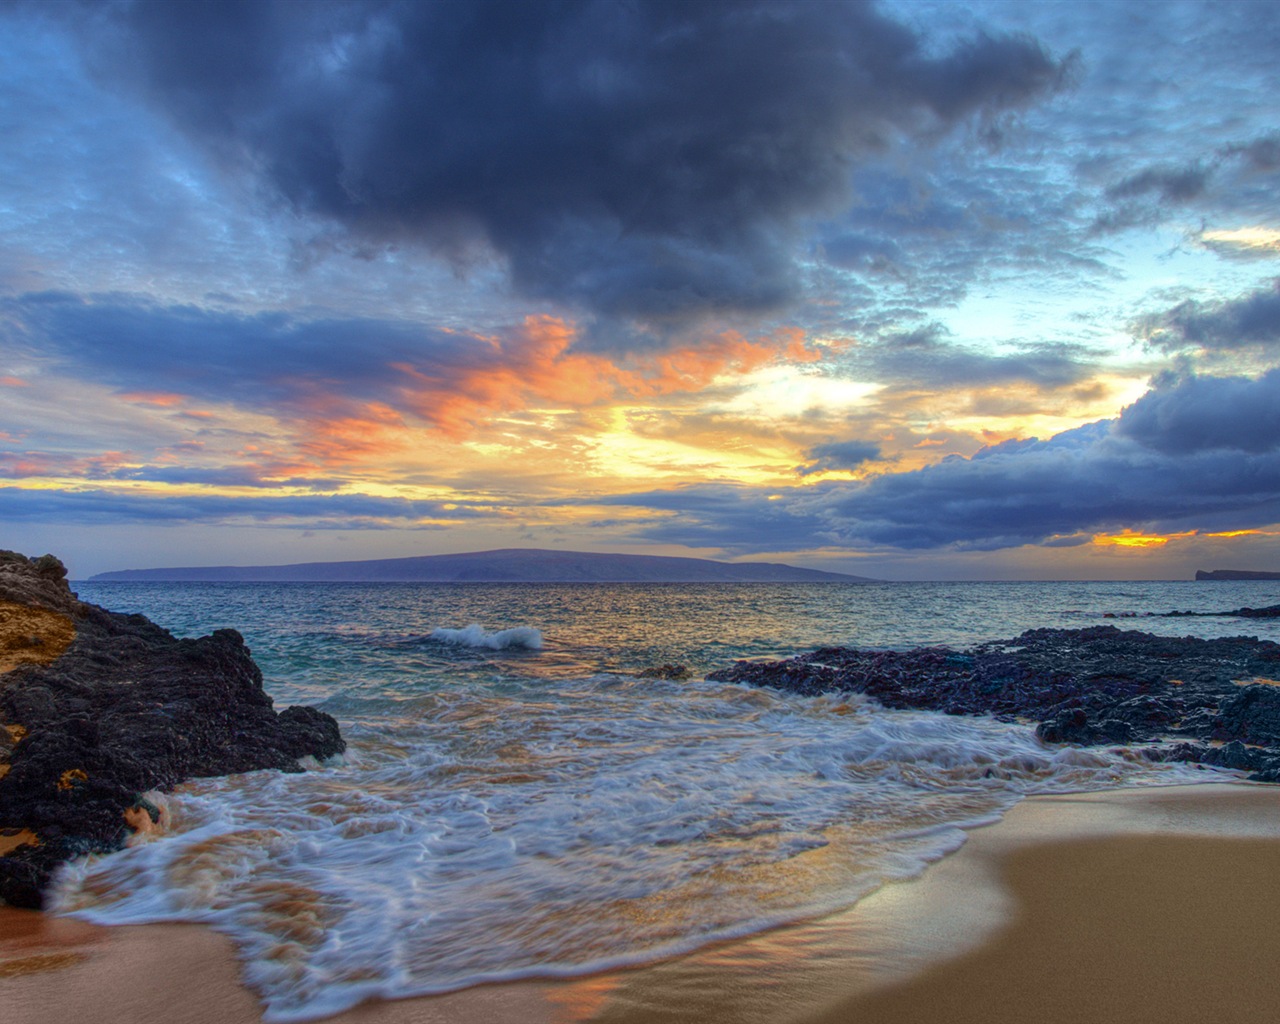 Windows 8 theme wallpaper: Beach sunrise and sunset views #9 - 1280x1024